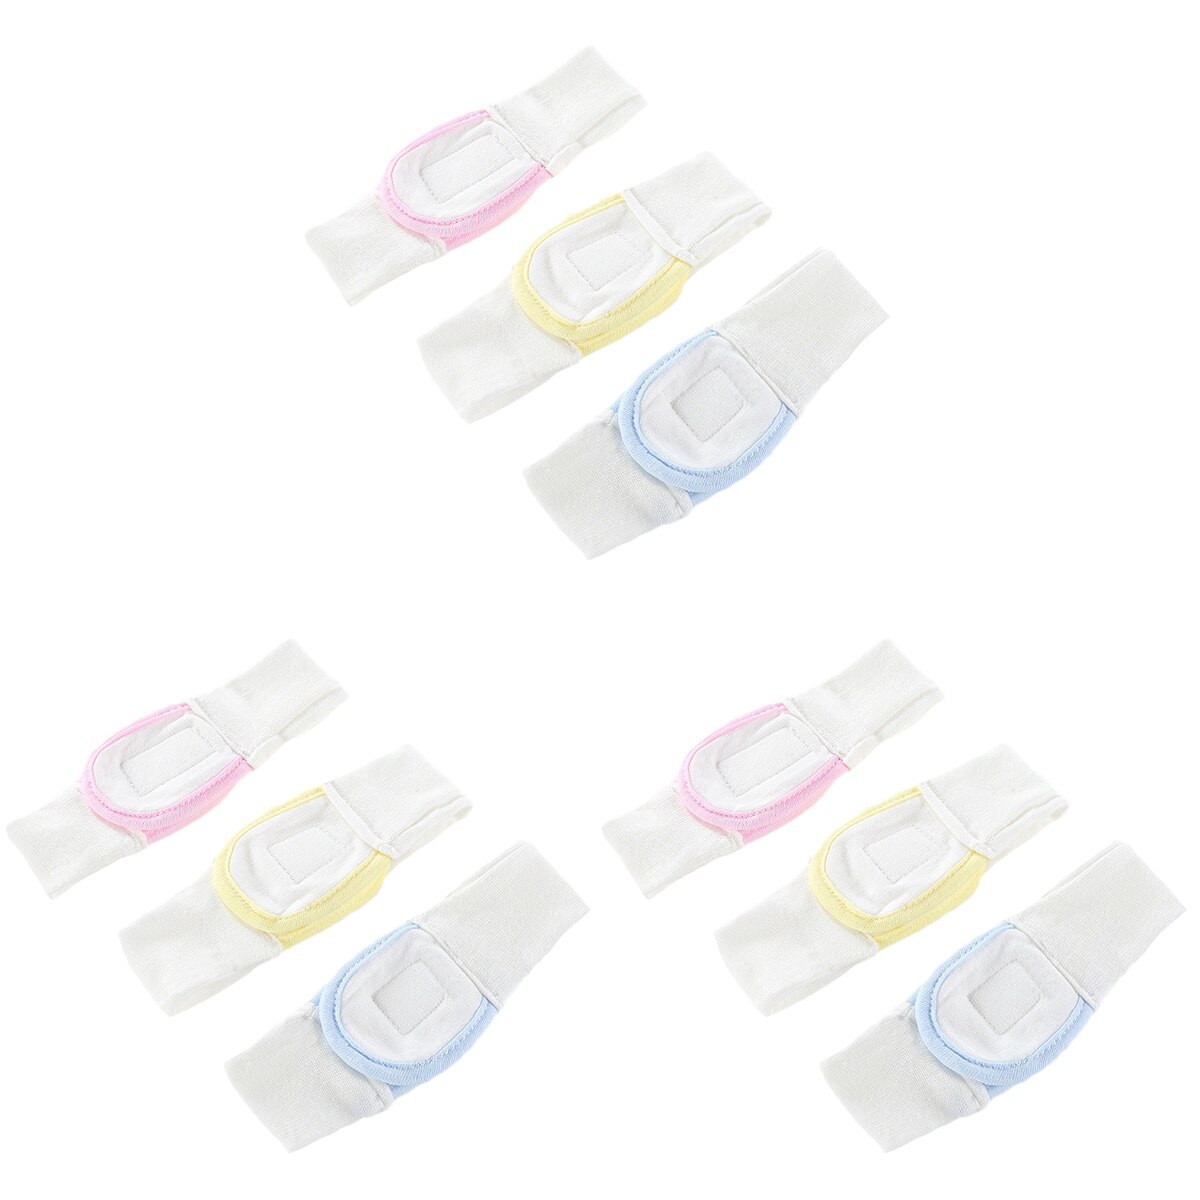 pcs Cotton Infant Baby Diaper Fixing Tape Adjustable Convenient Reusable Diaper Fixed Belt (Blue/Yellow/Pink, Each Color 1pc)